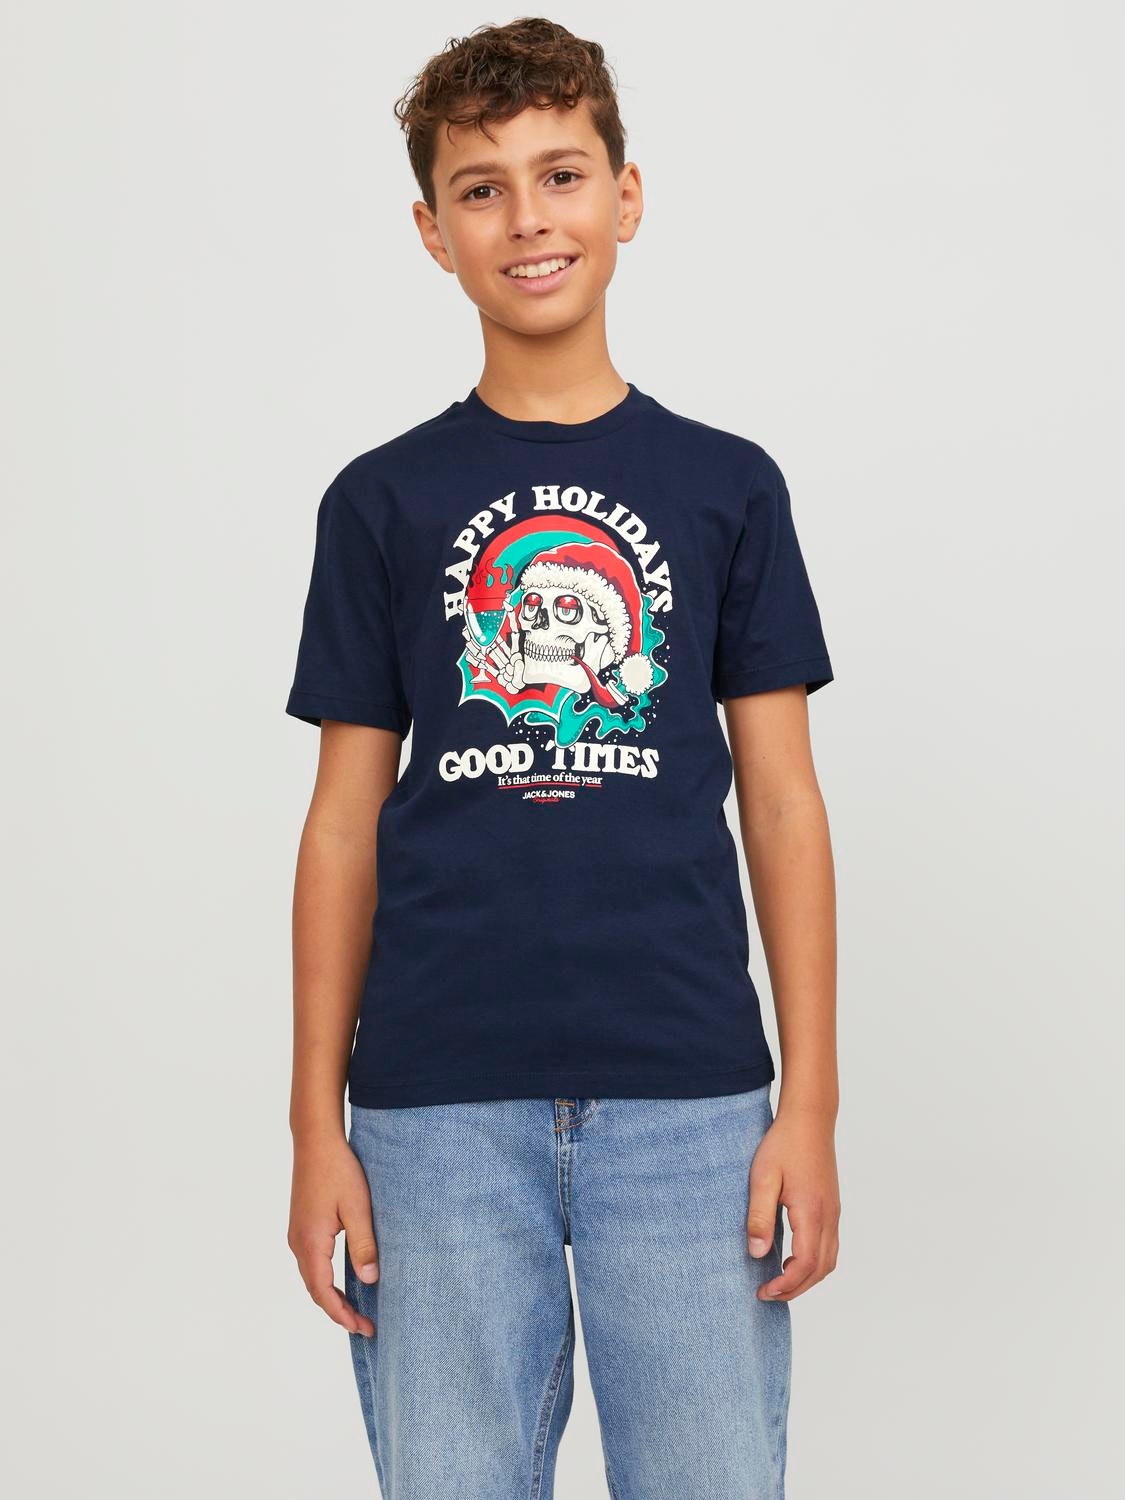 Jack & Jones T-shirt X-mas Pour les garçons -Navy Blazer - 12247645